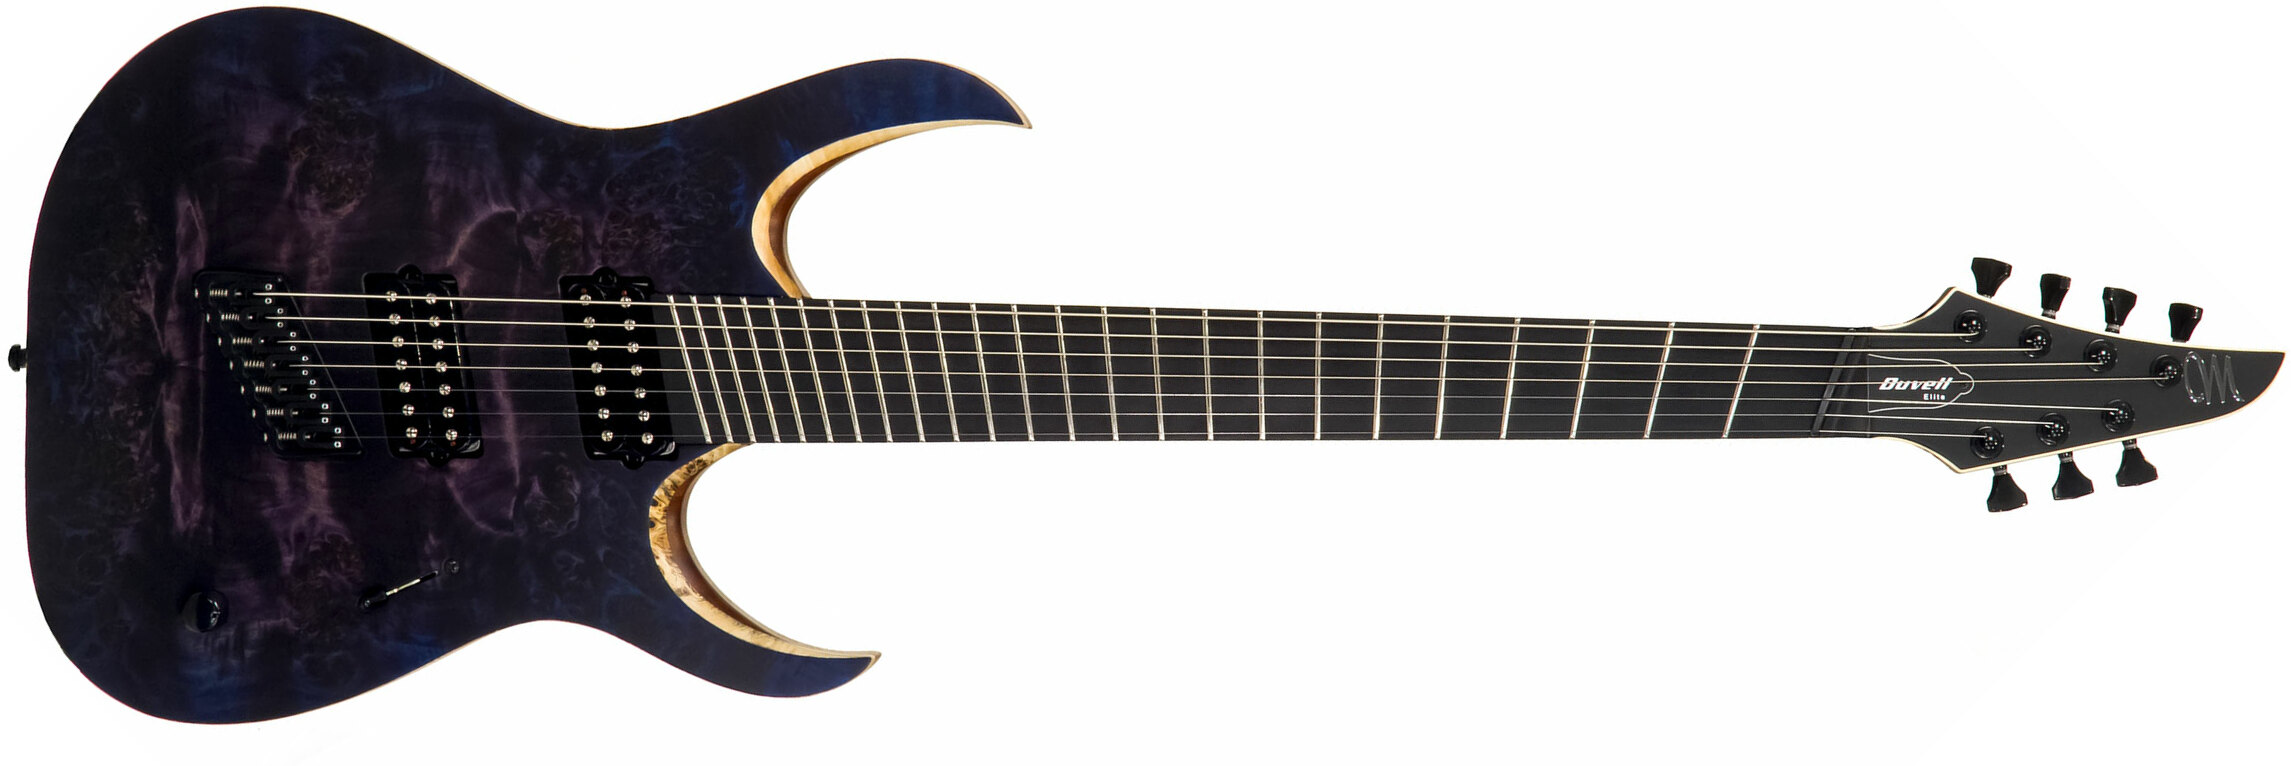 Mayones Guitars Duvell Elite V-frets 7c Multiscale 2h Bare Knuckle Ht Eb - Dirty Purple Blue Burst - Multi-Scale Guitar - Main picture